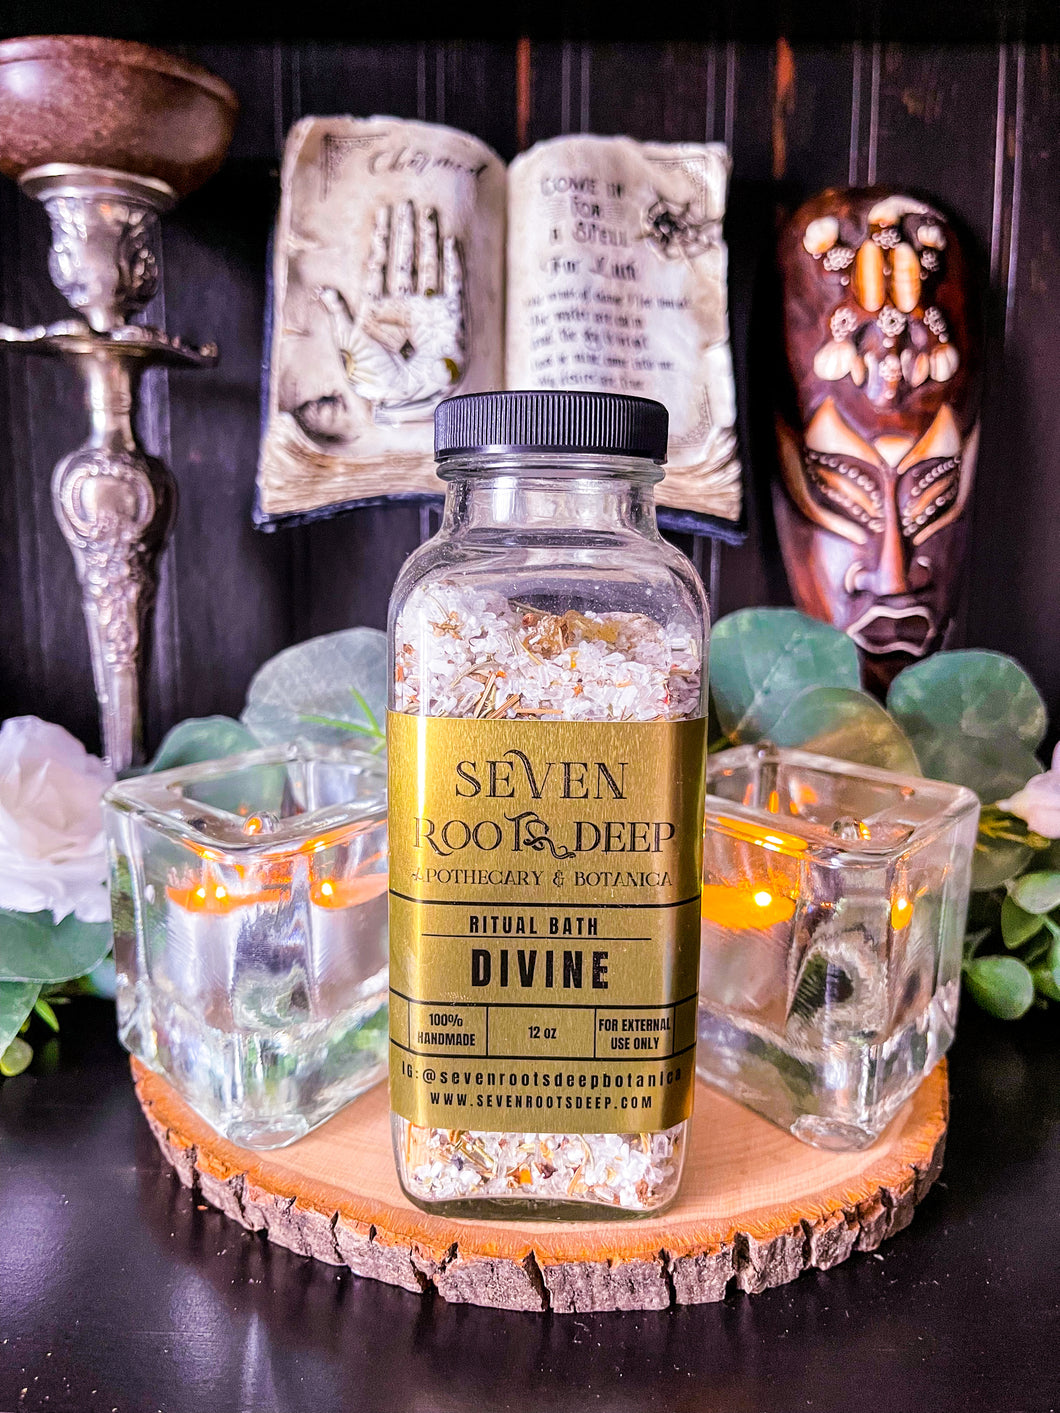 Divine Ritual Bath